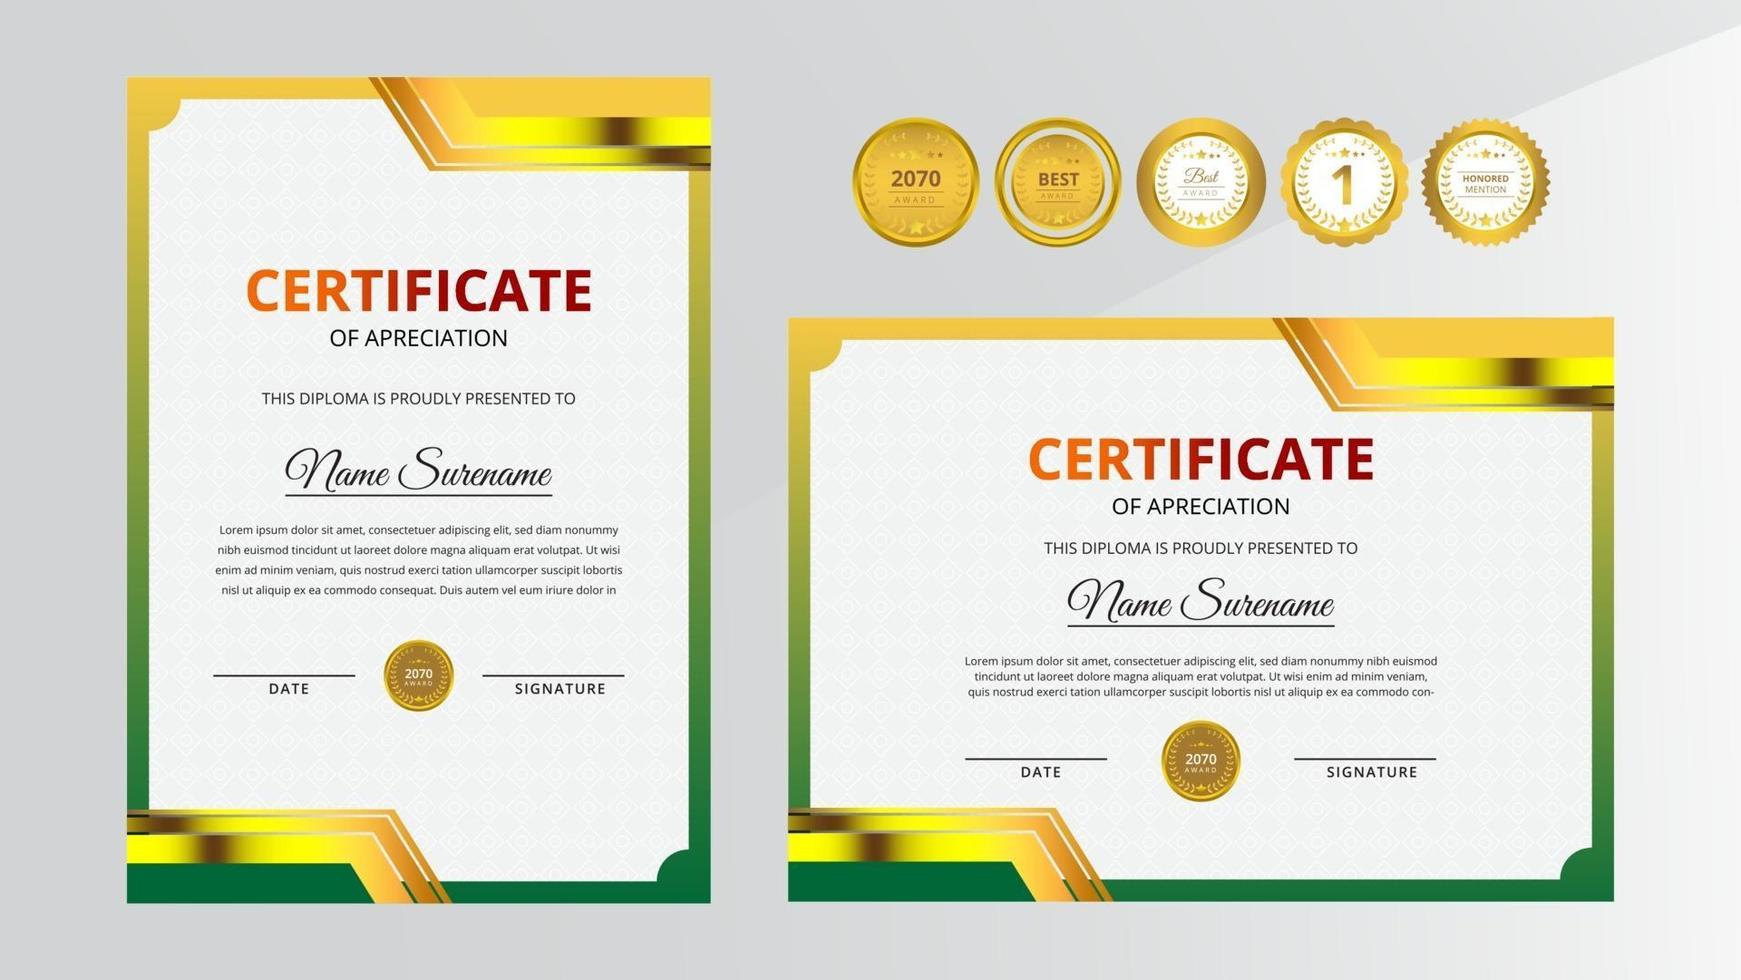 certificado de luxo gradiente dourado e verde com conjunto de crachá dourado vetor